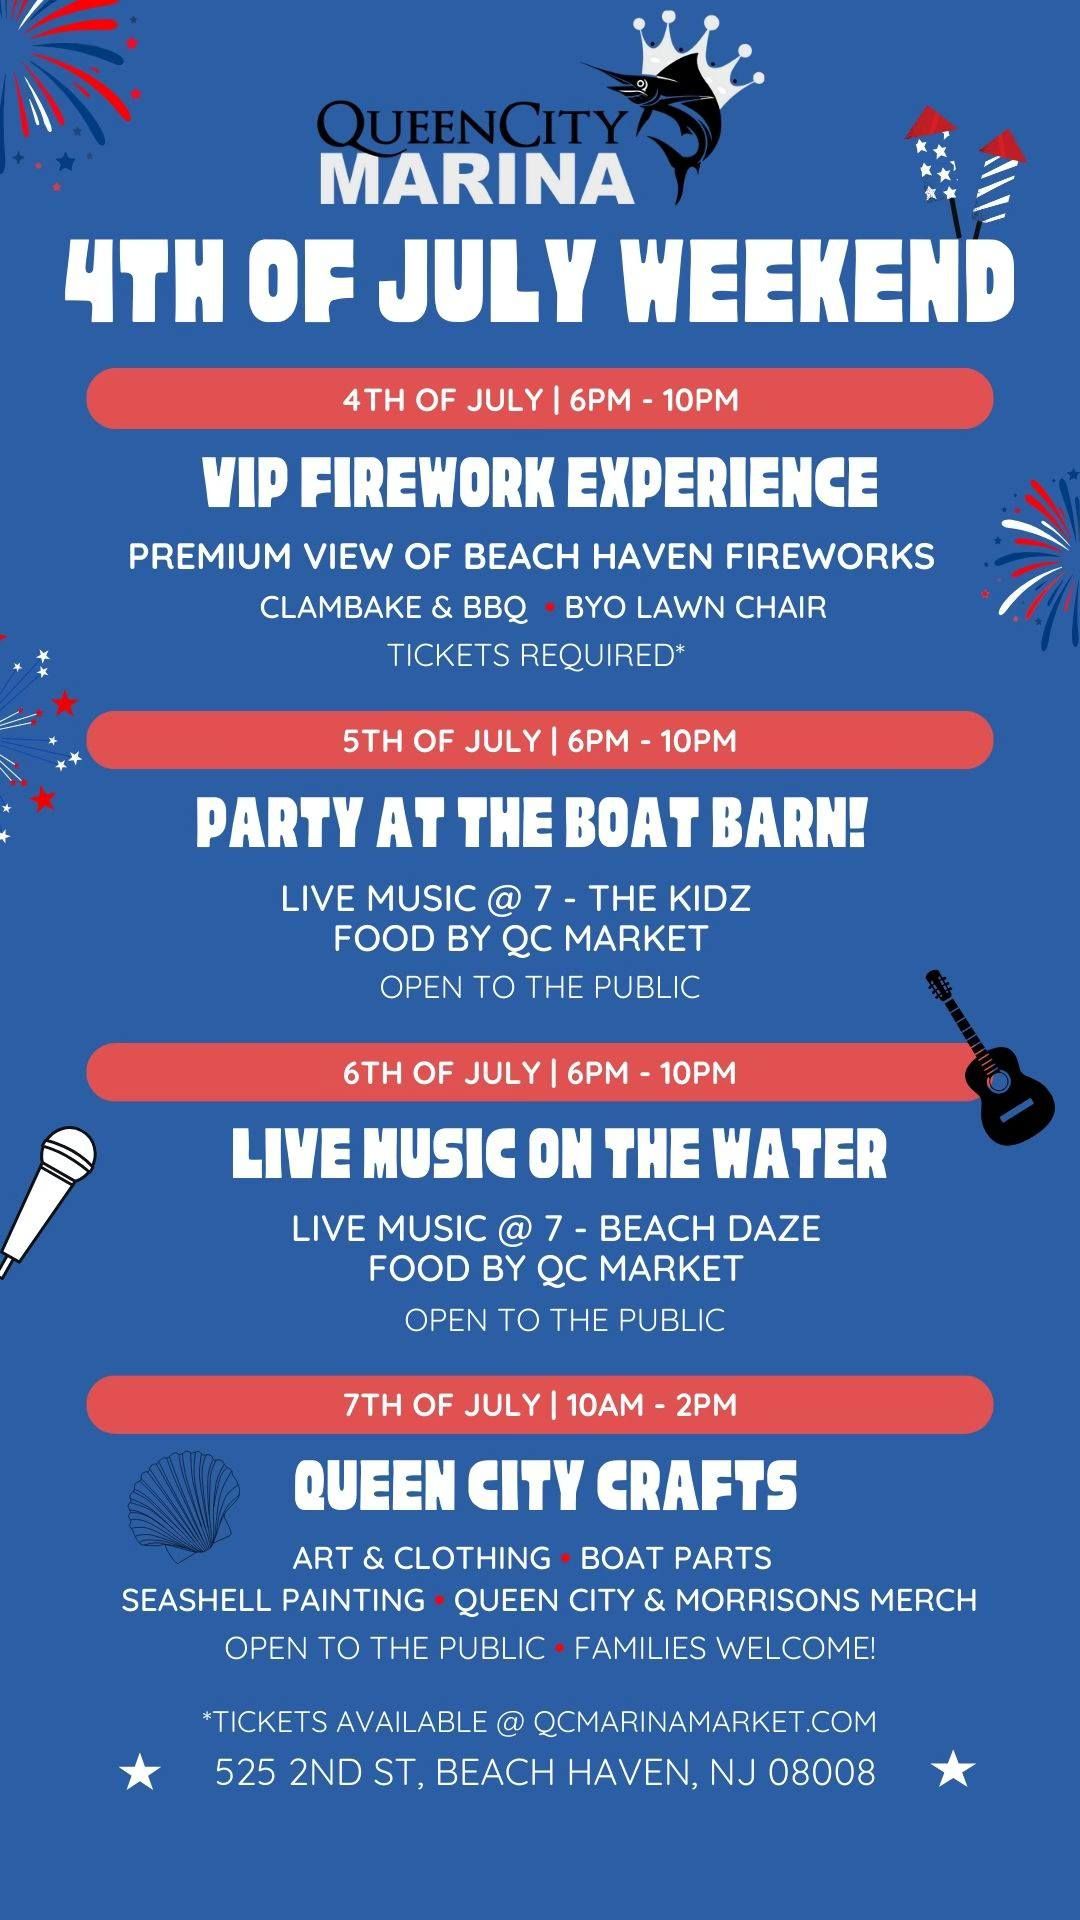 Queen City Marina - 4th of July Weekend Fun